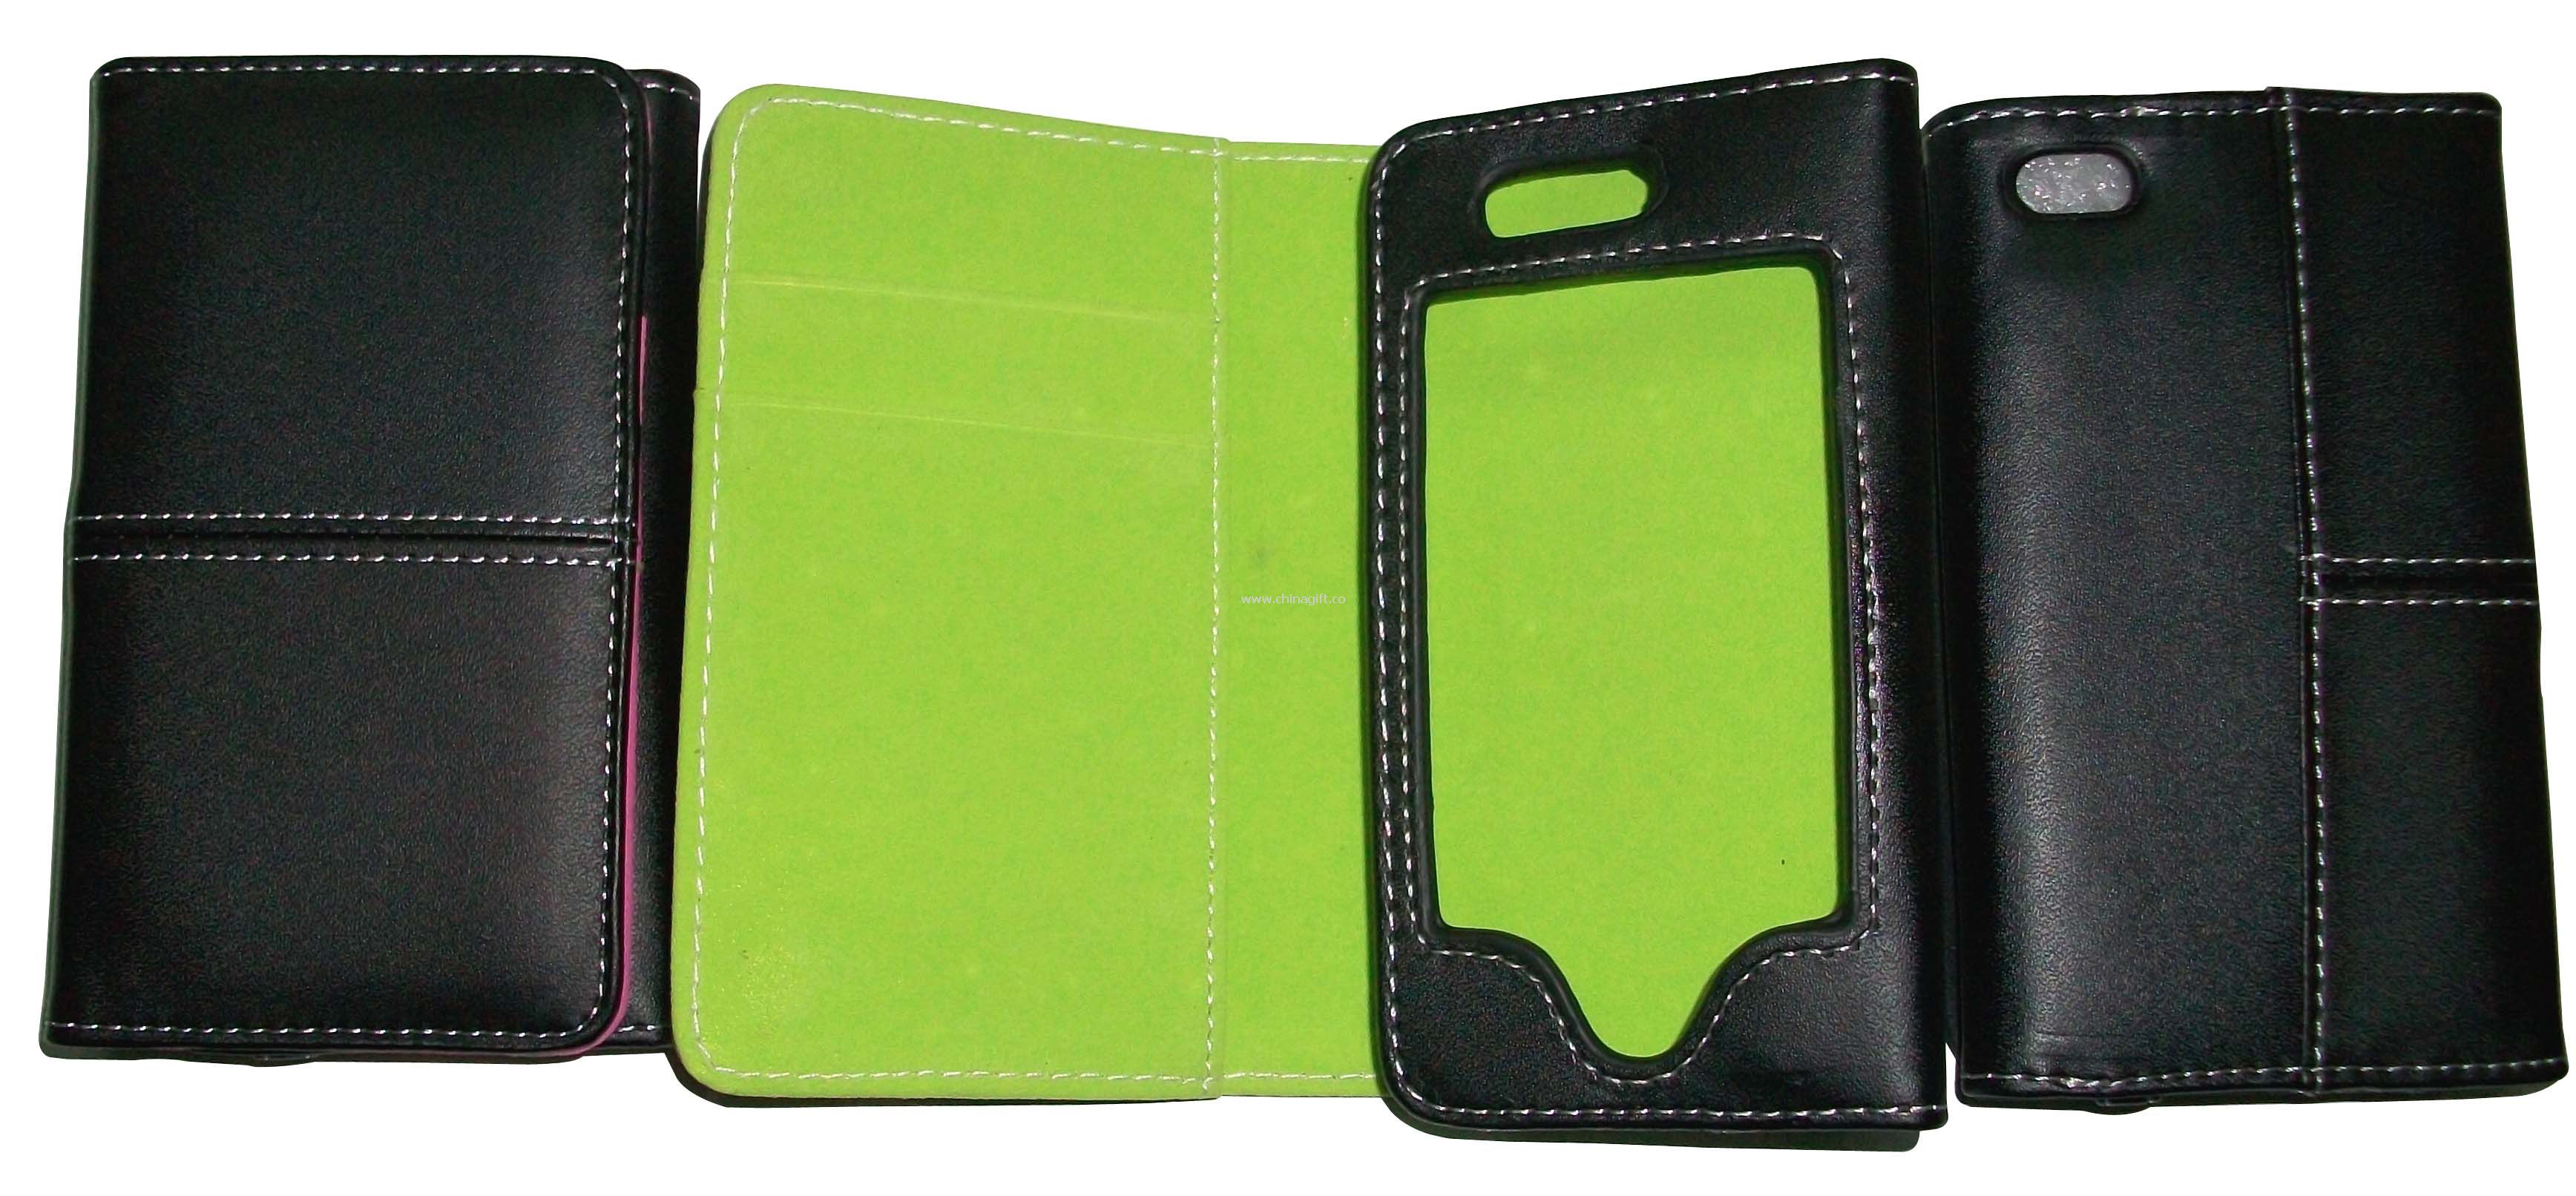 Flip Card Holder Case For Iphone 4